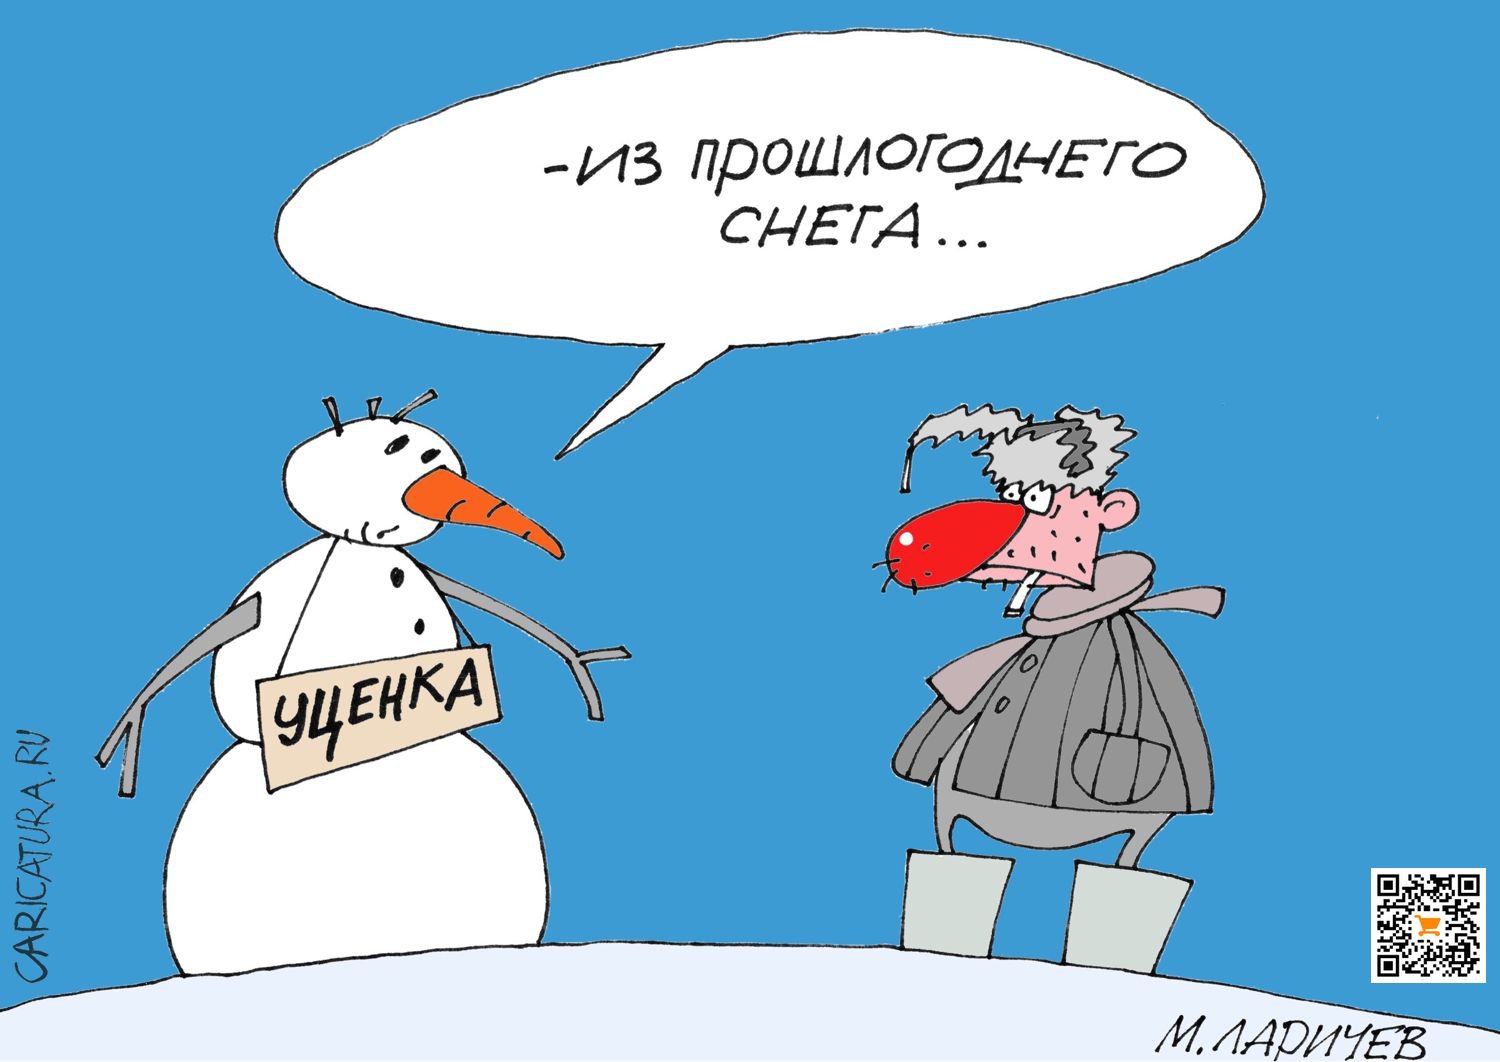 Карикатура "Уценка", Михаил Ларичев